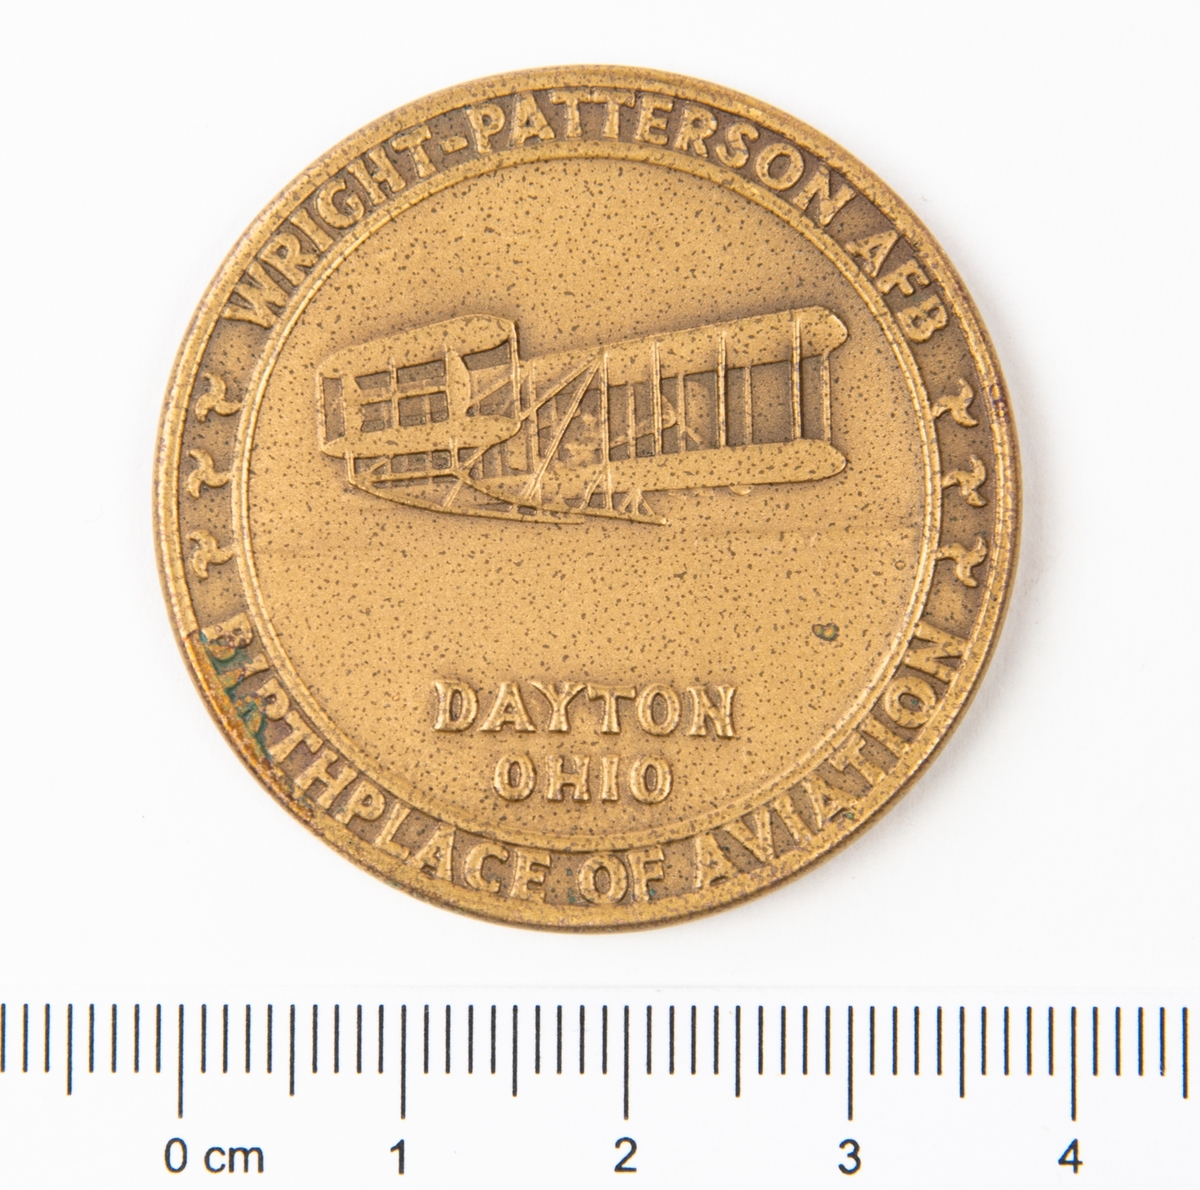 Minnesmedalj, text på framsida: "United states airforce museum, dedicated 1971". Text på frånsidan: "Wright Patterson AFB Birthplace of aviation, Dayton Ohio".